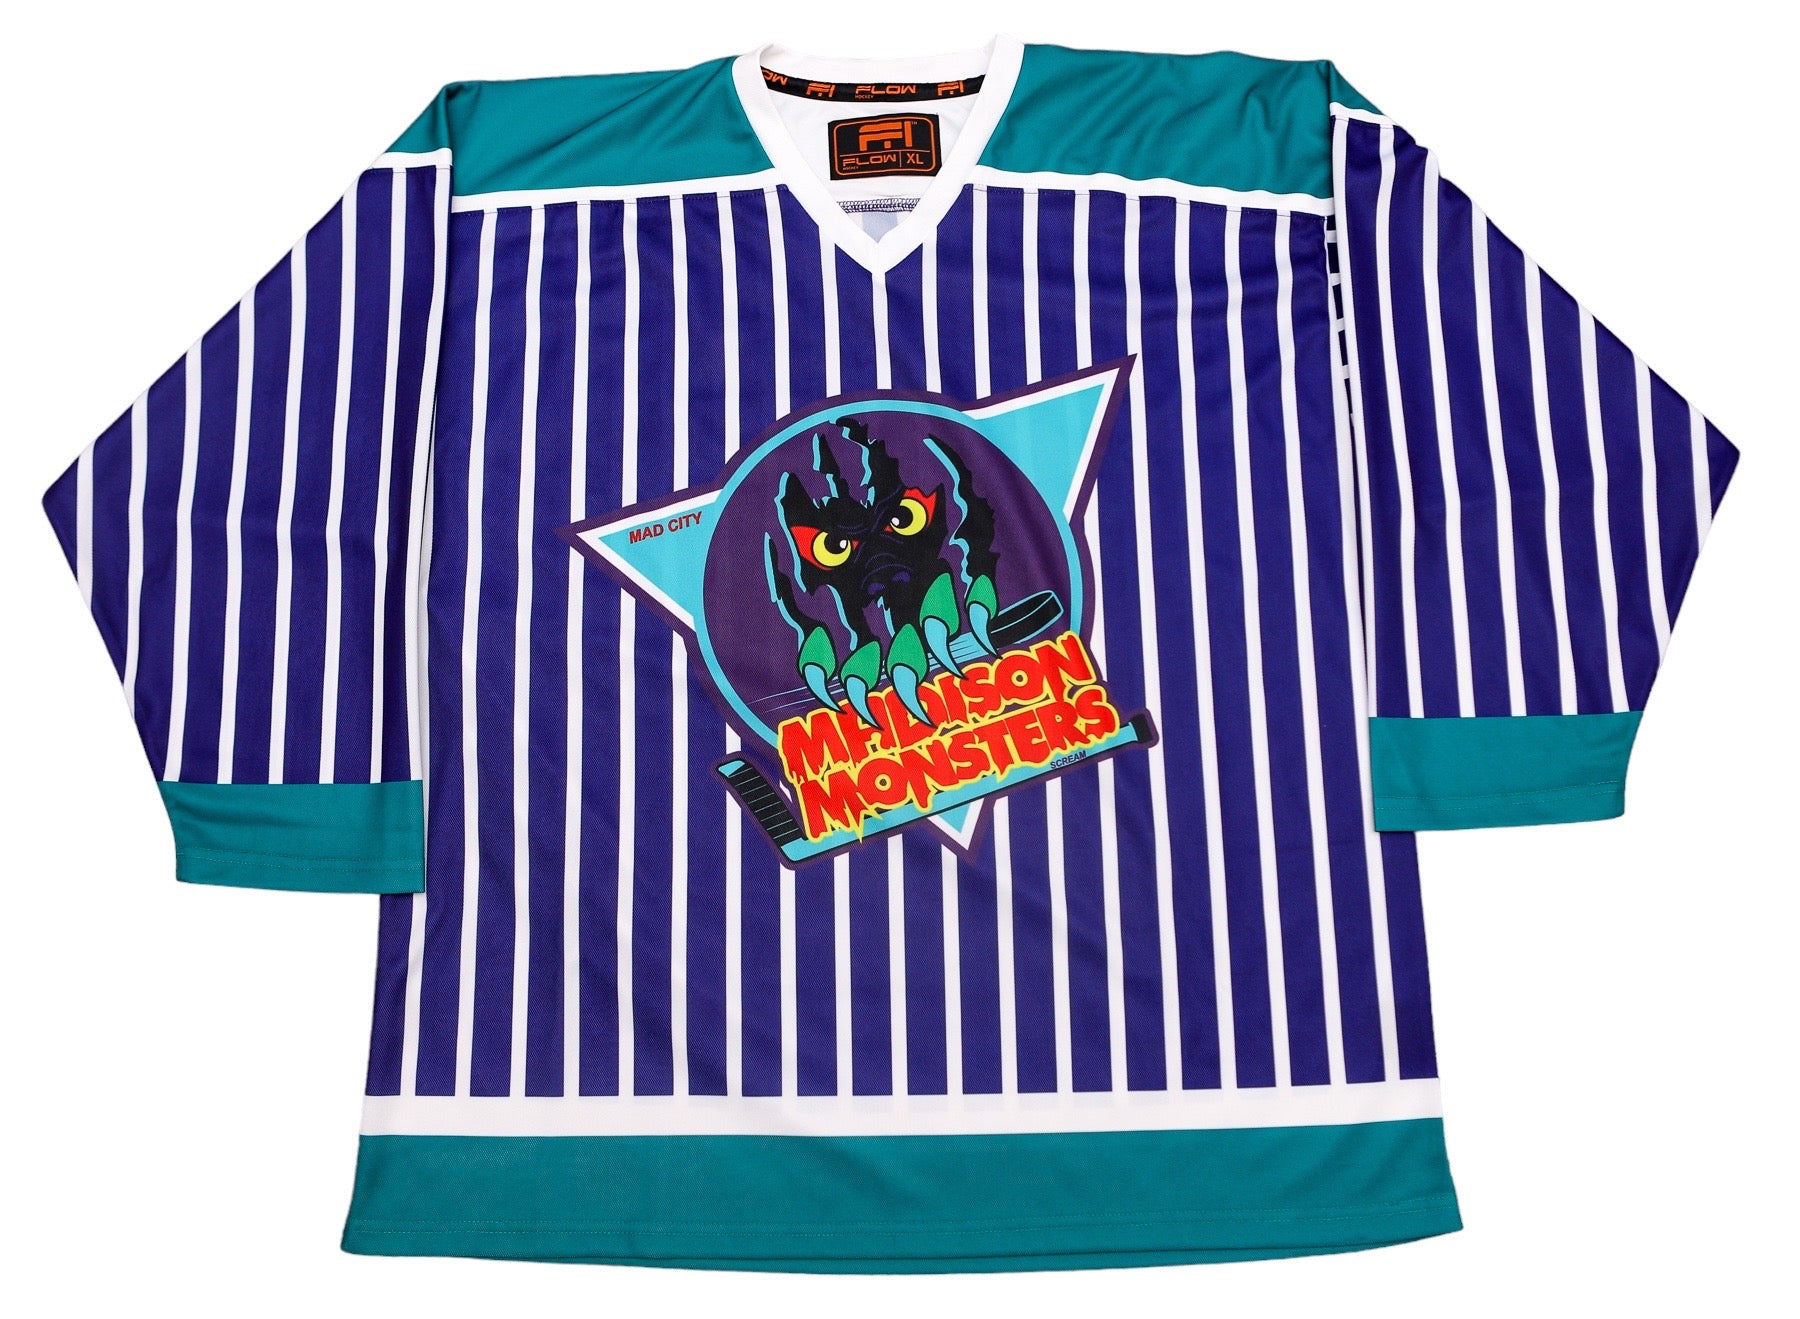 Madison Monsters hockey jersey